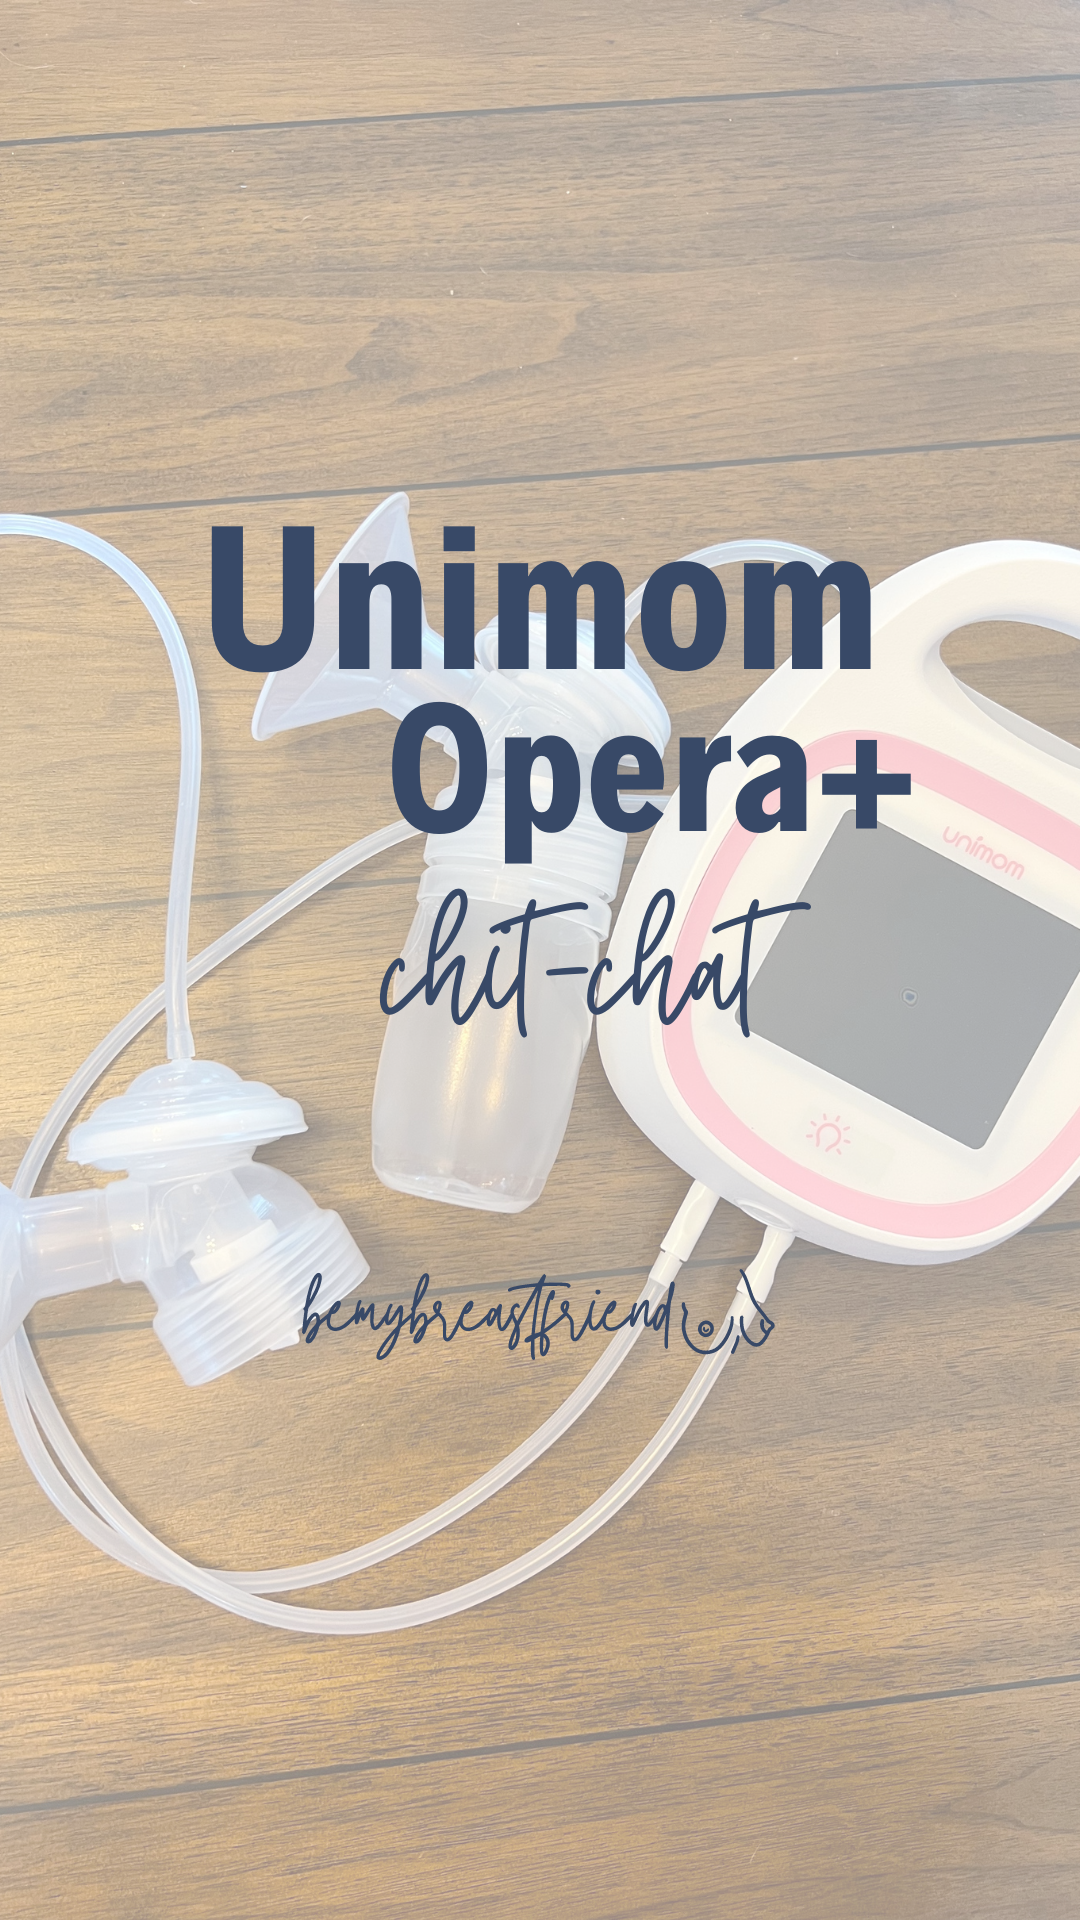 Unimom Opera+ chít-chat